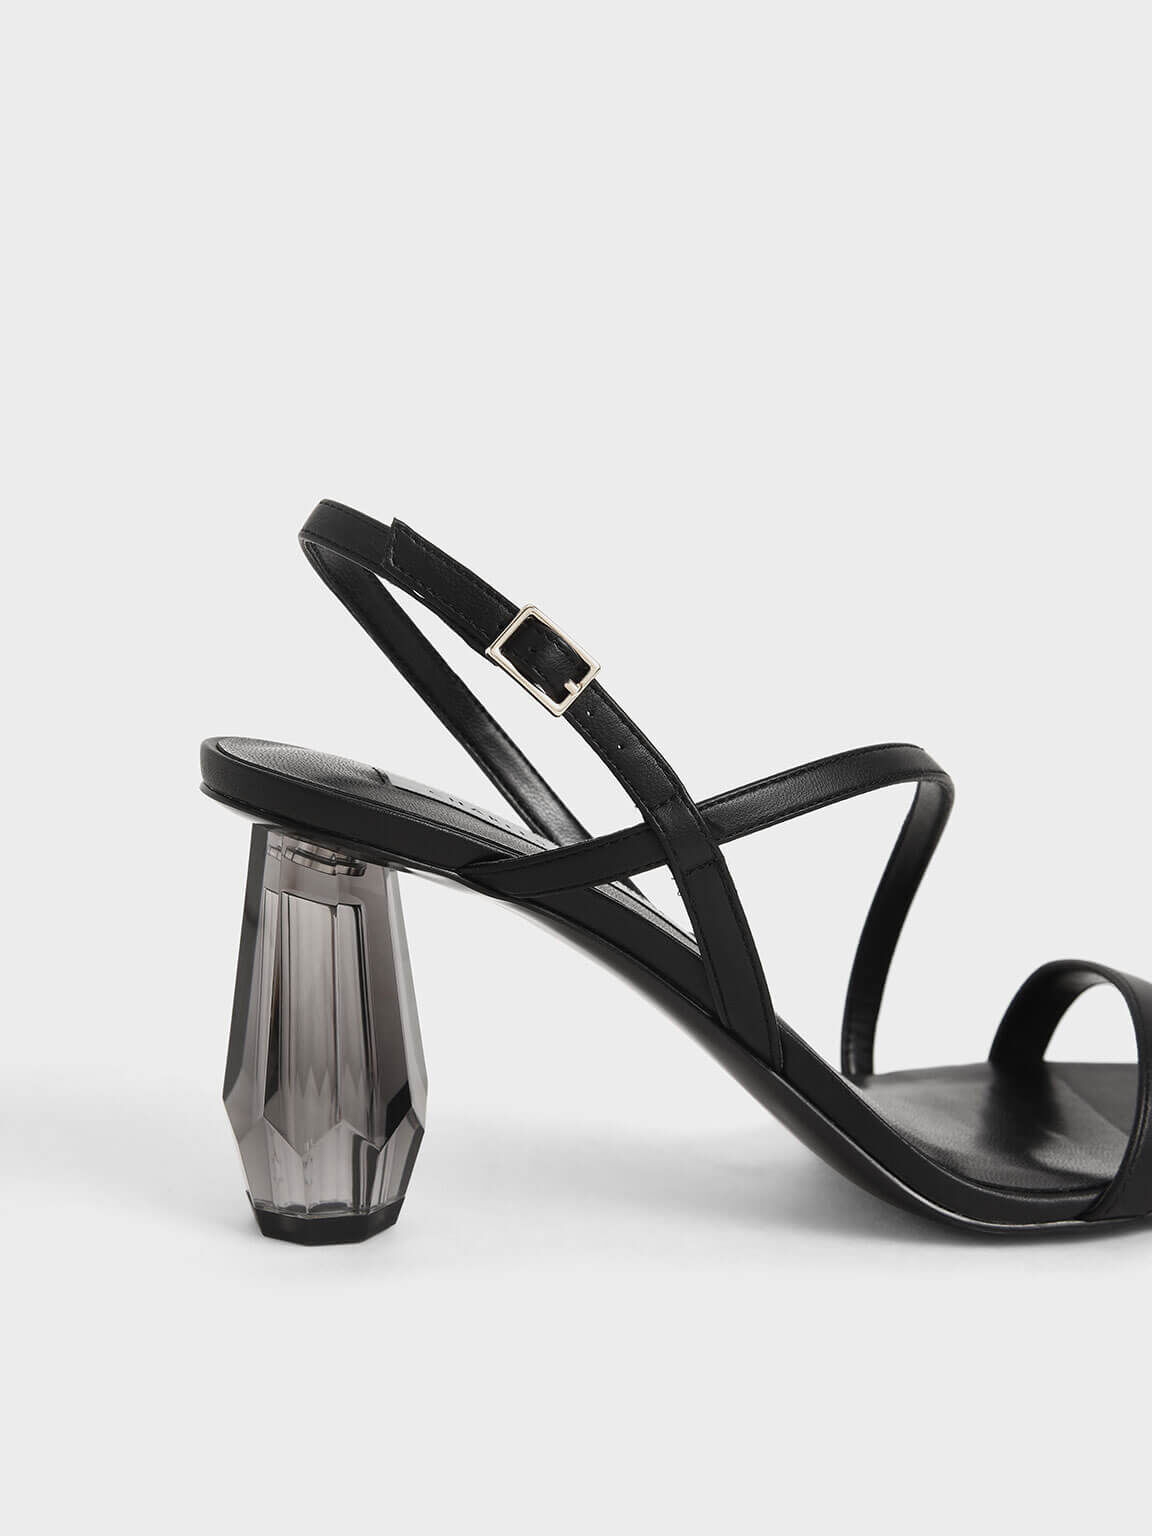 Sandal See-Through Sculptural Heel, Black, hi-res